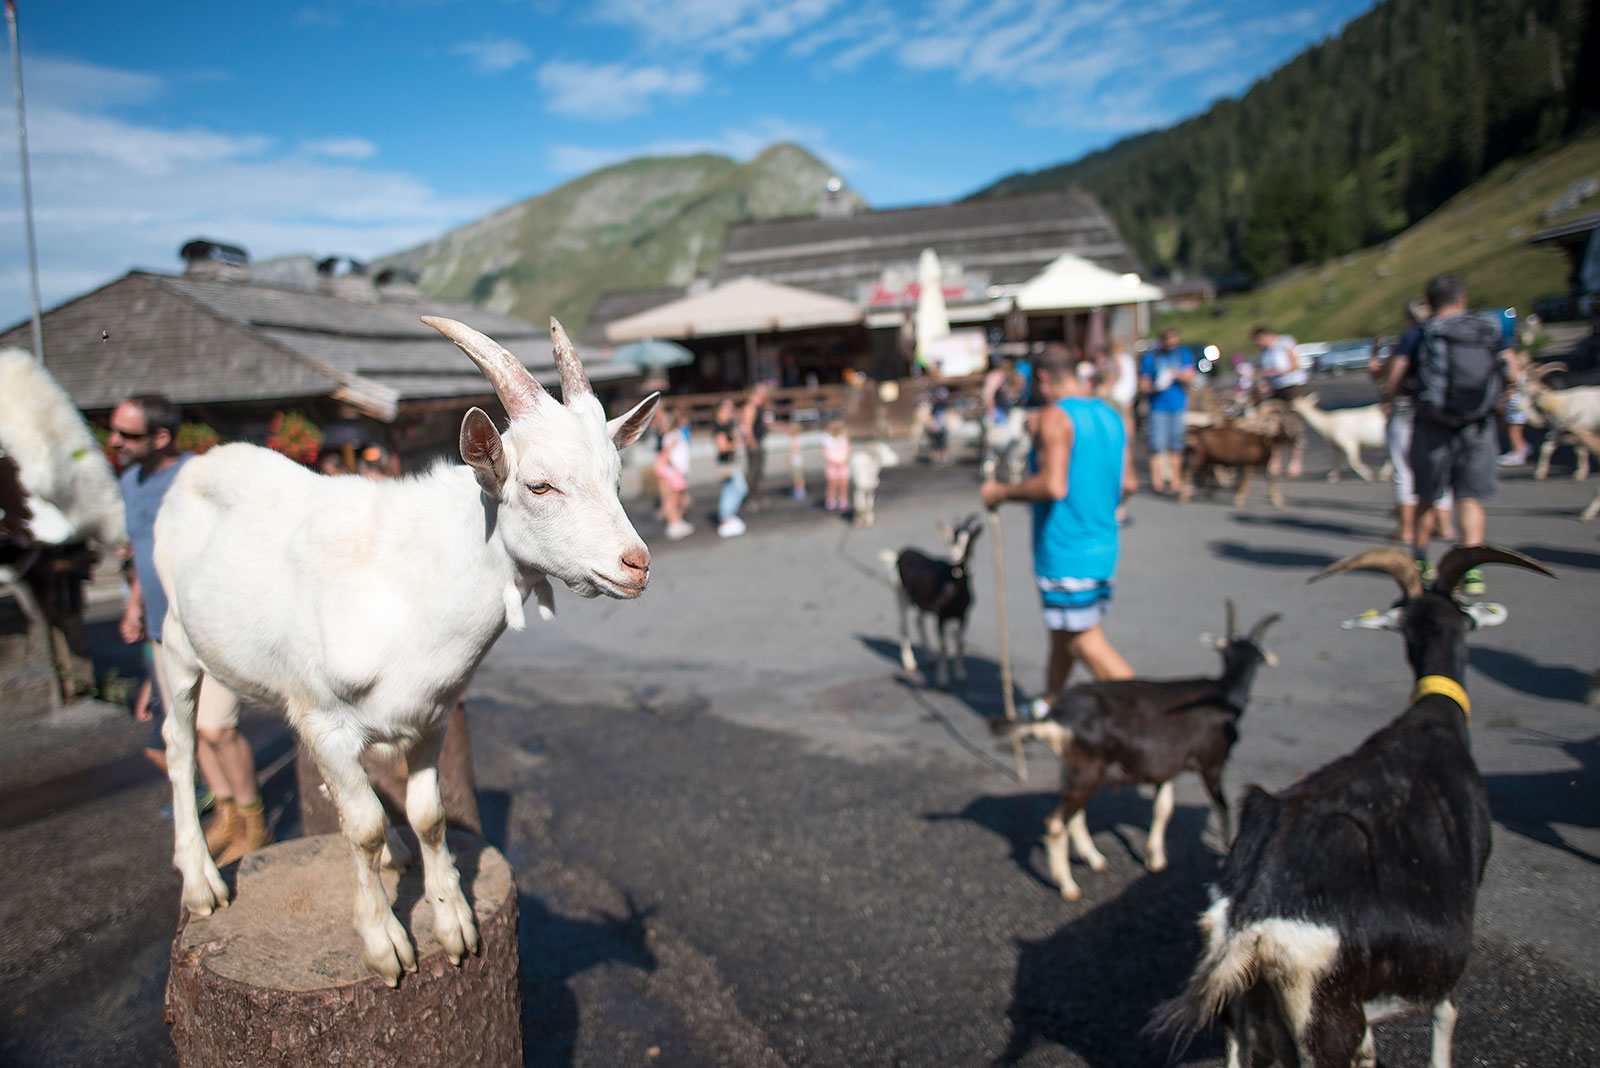 Lindarets, the goats village